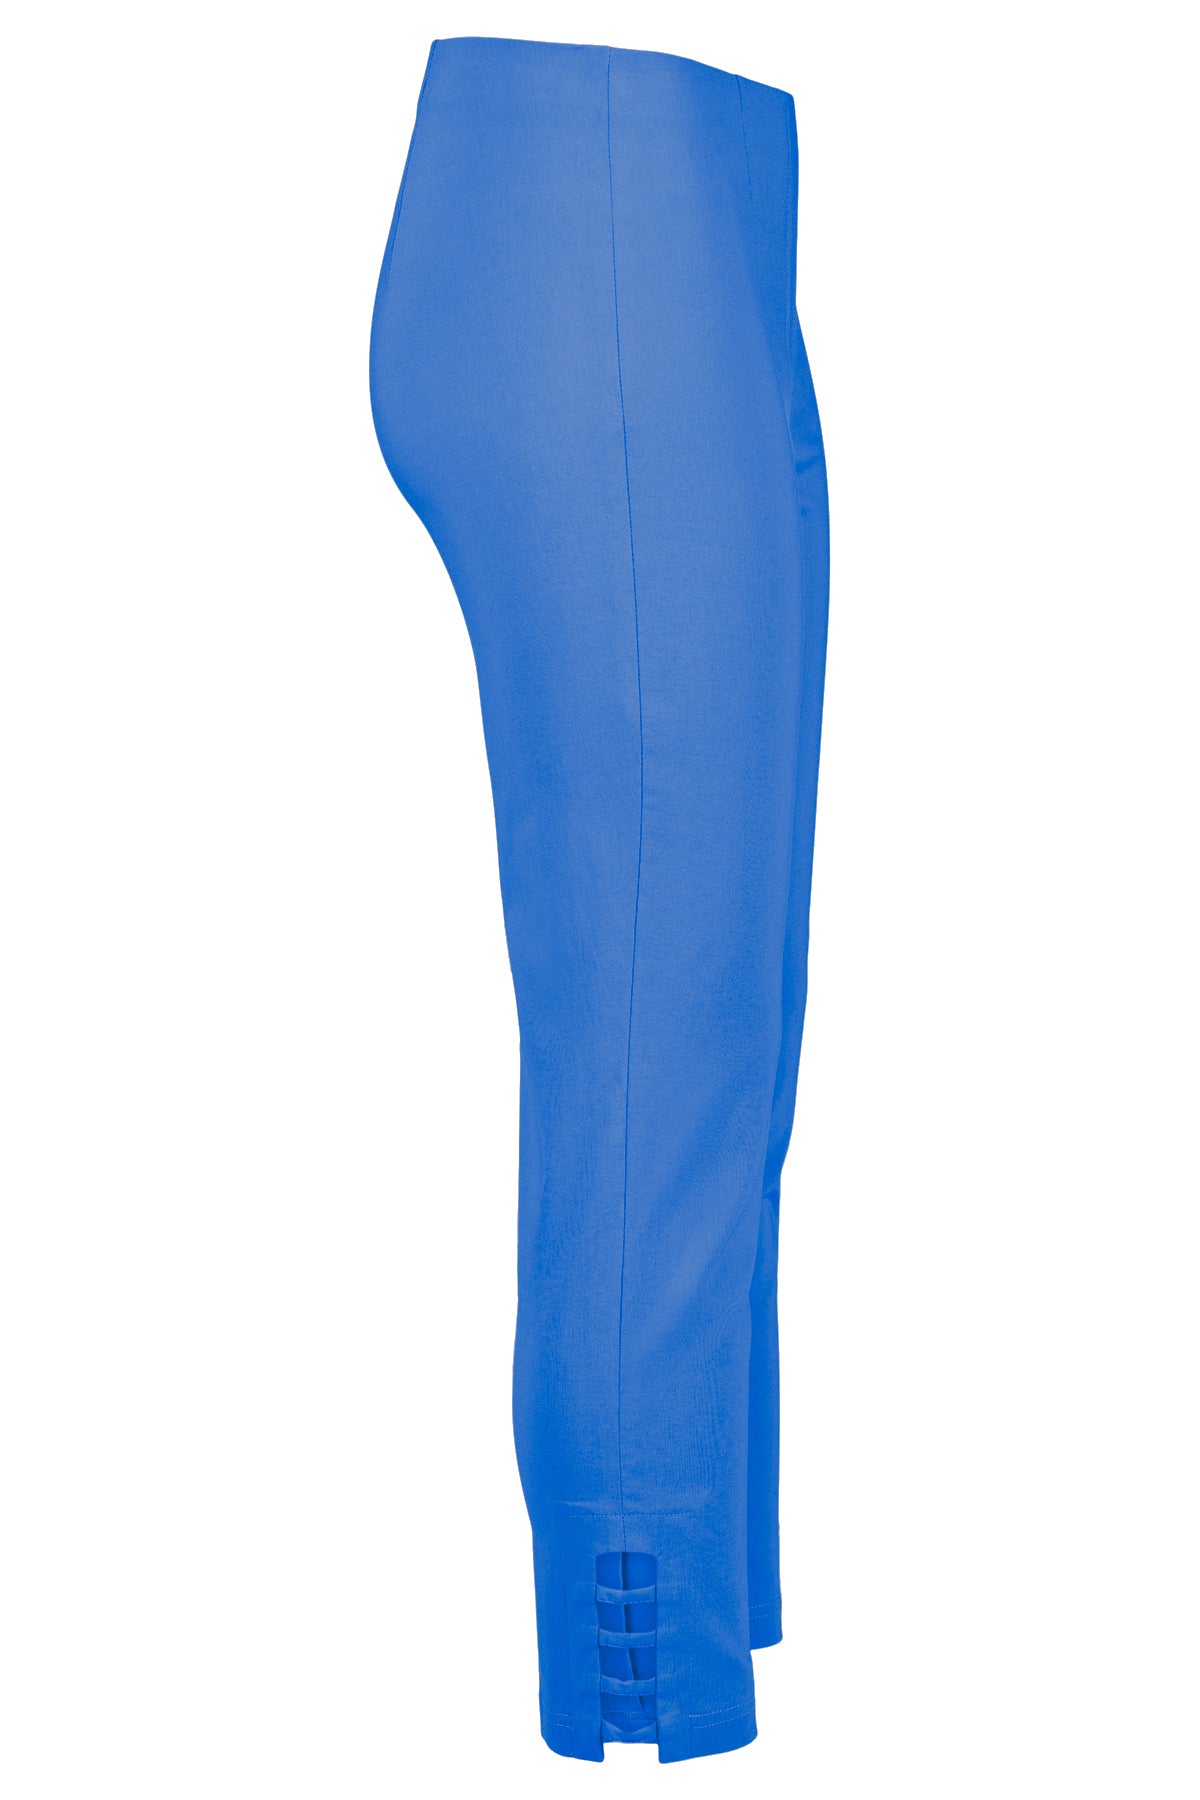 Robell Lena 09 Diva Blue Crop Trousers